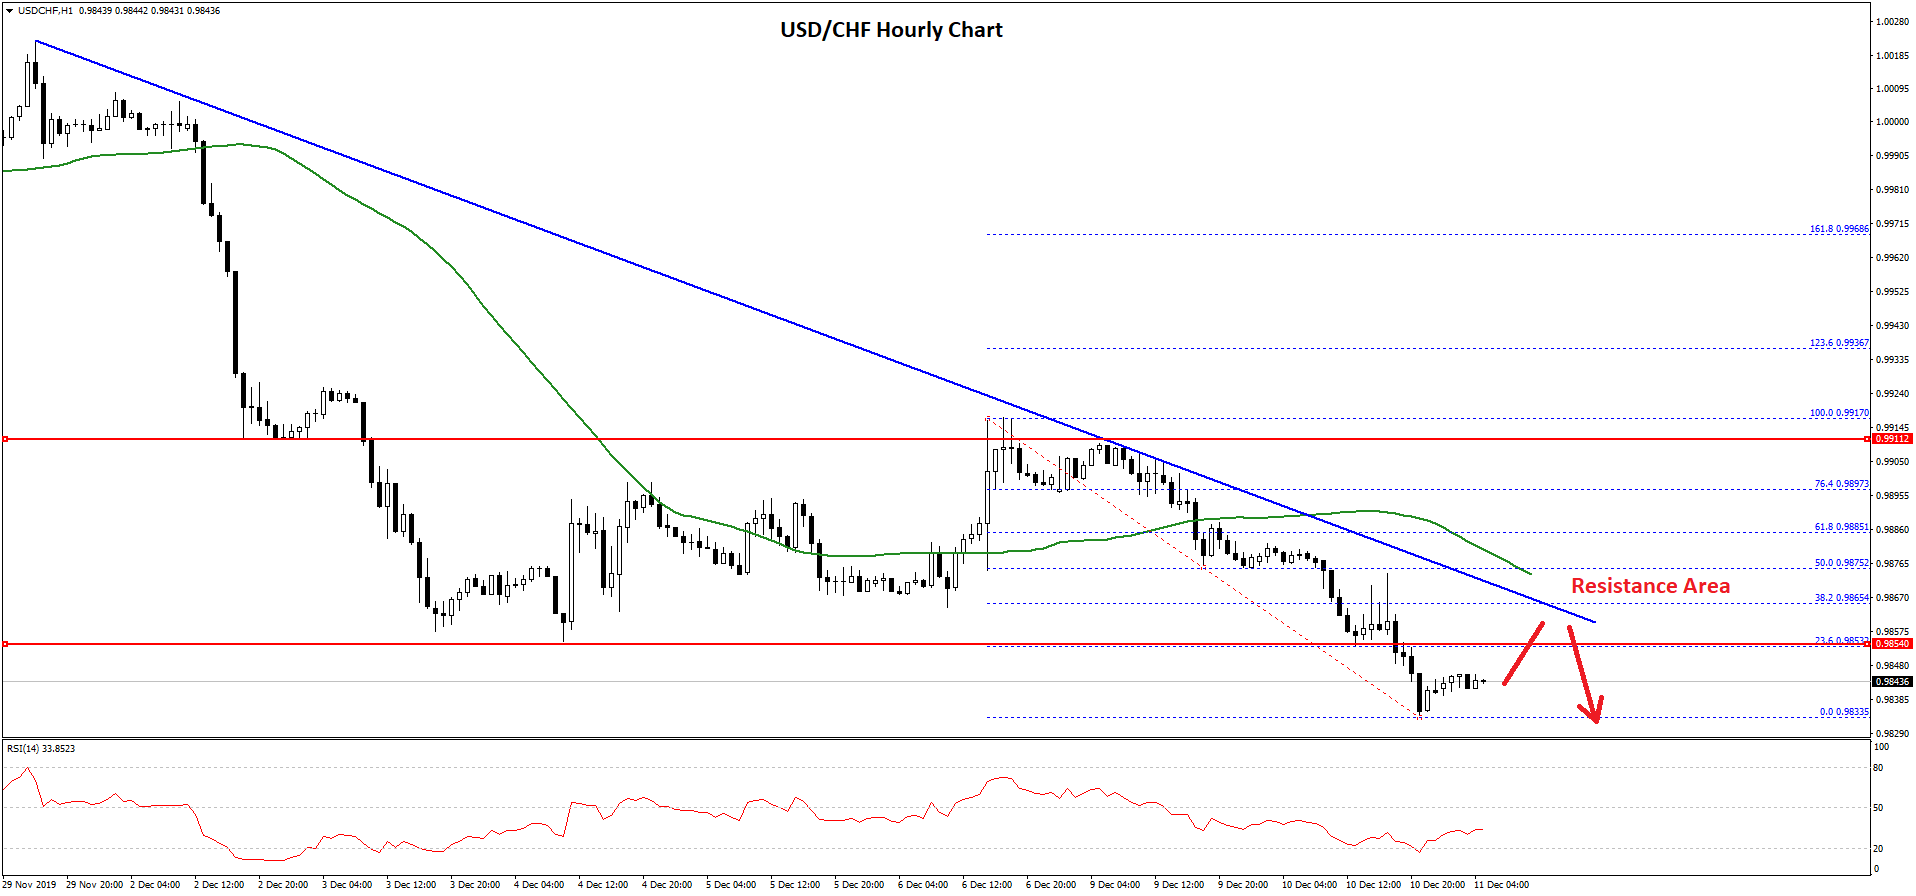 USD/CHF Technical Analysis US Dollar Swiss Franc